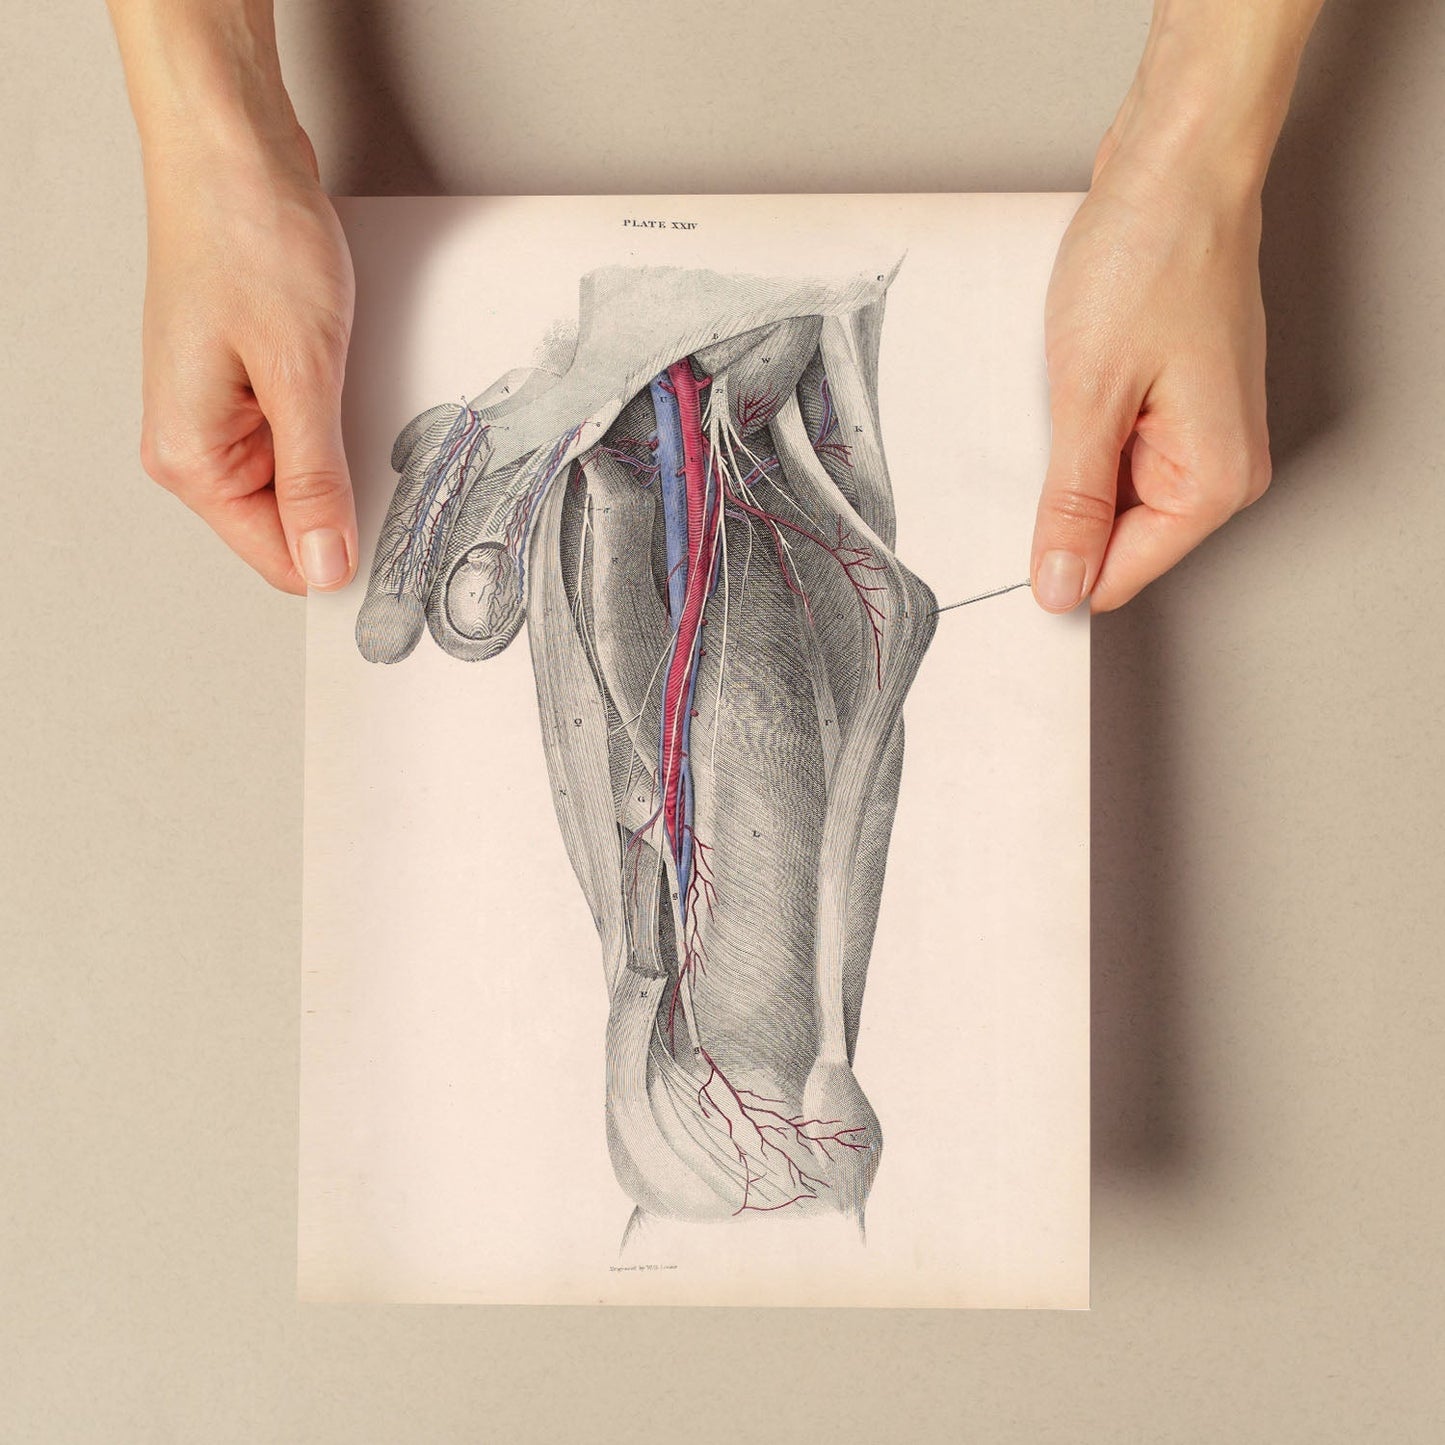 Dissection of the groin-Artwork-Nacnic-Nacnic Estudio SL